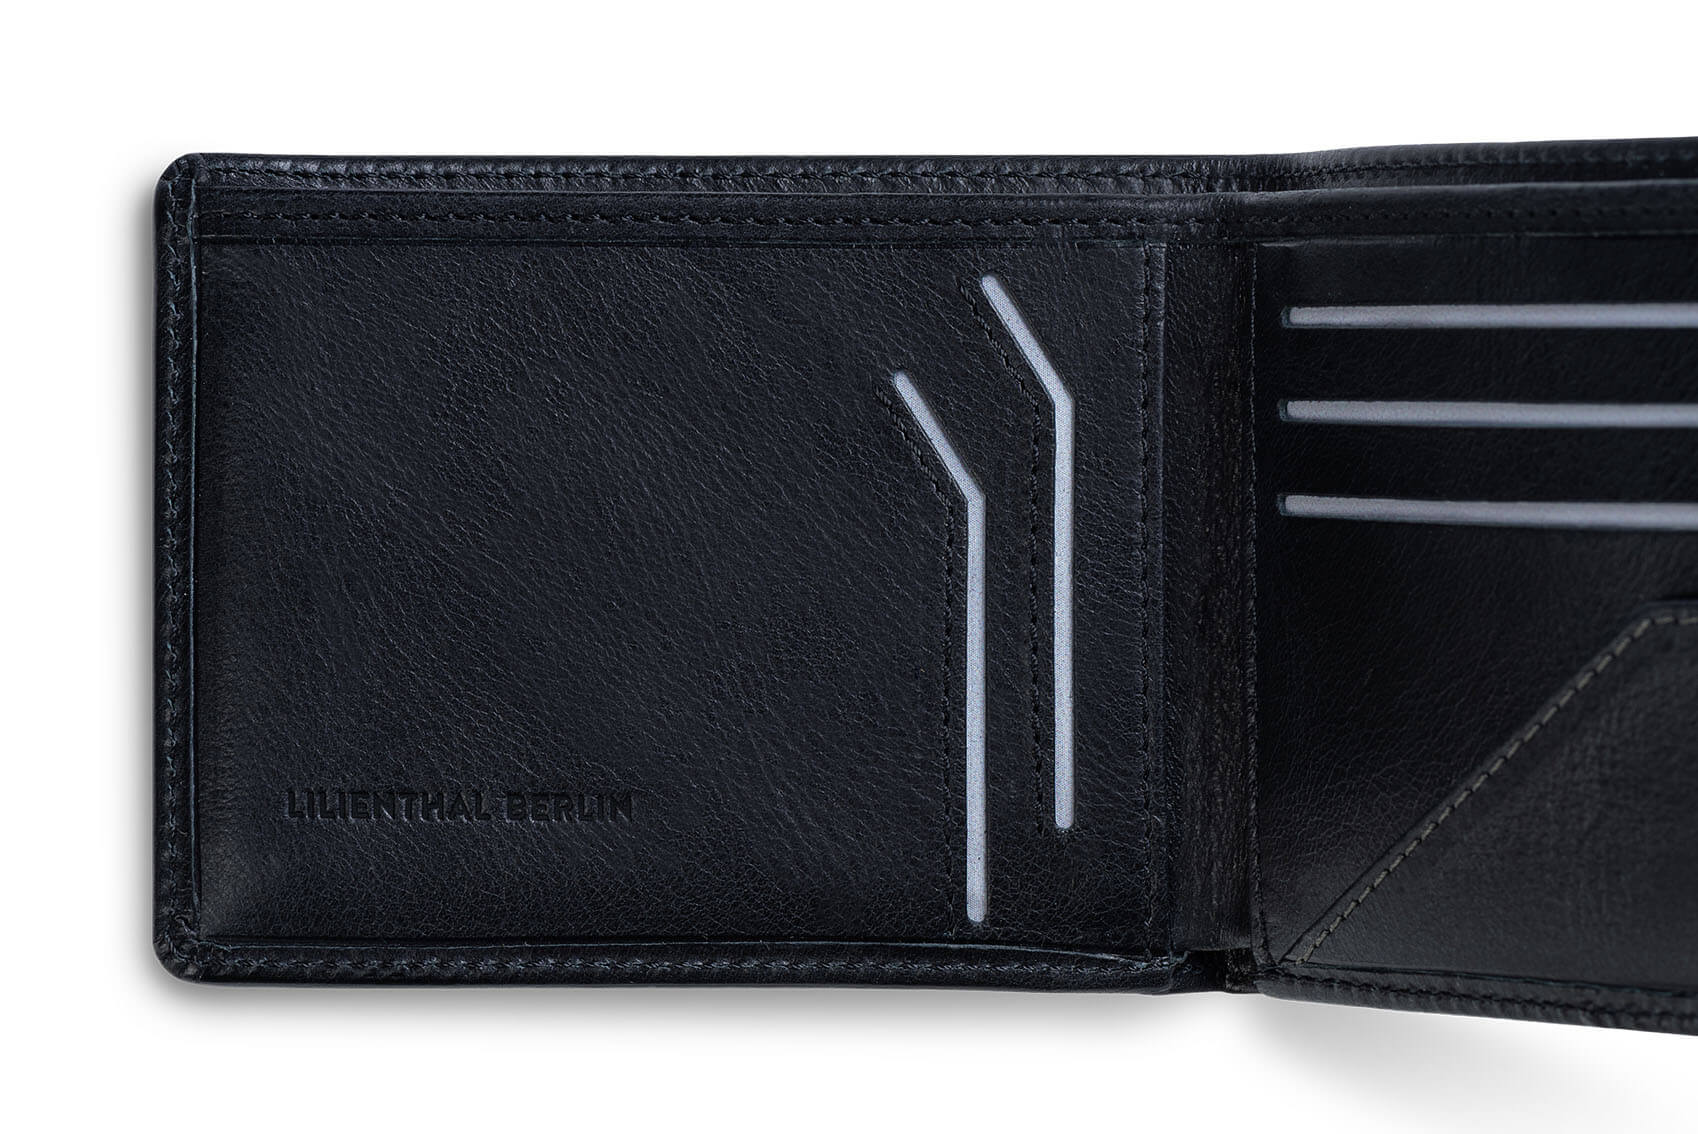 Wallet Medium - Black-Grey | All Wallets | Bags | Lilienthal Berlin -  Award-winning Designs